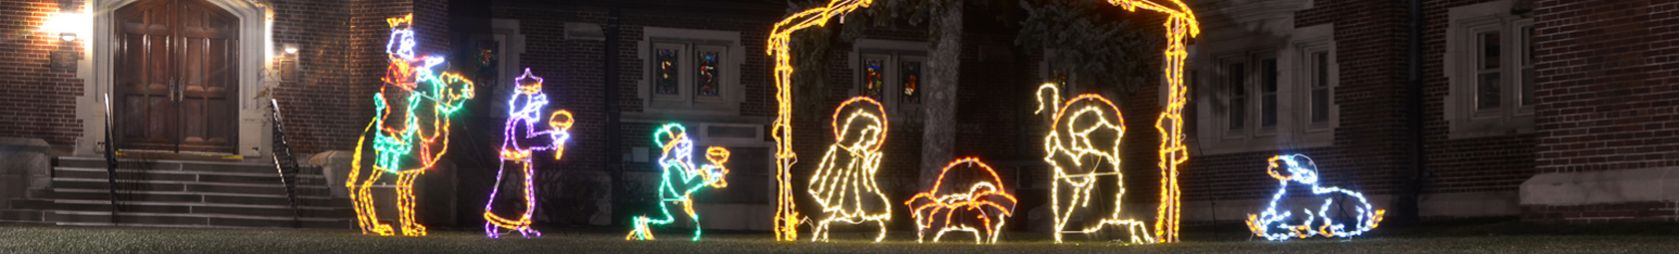 LED Nativity Scene Displays